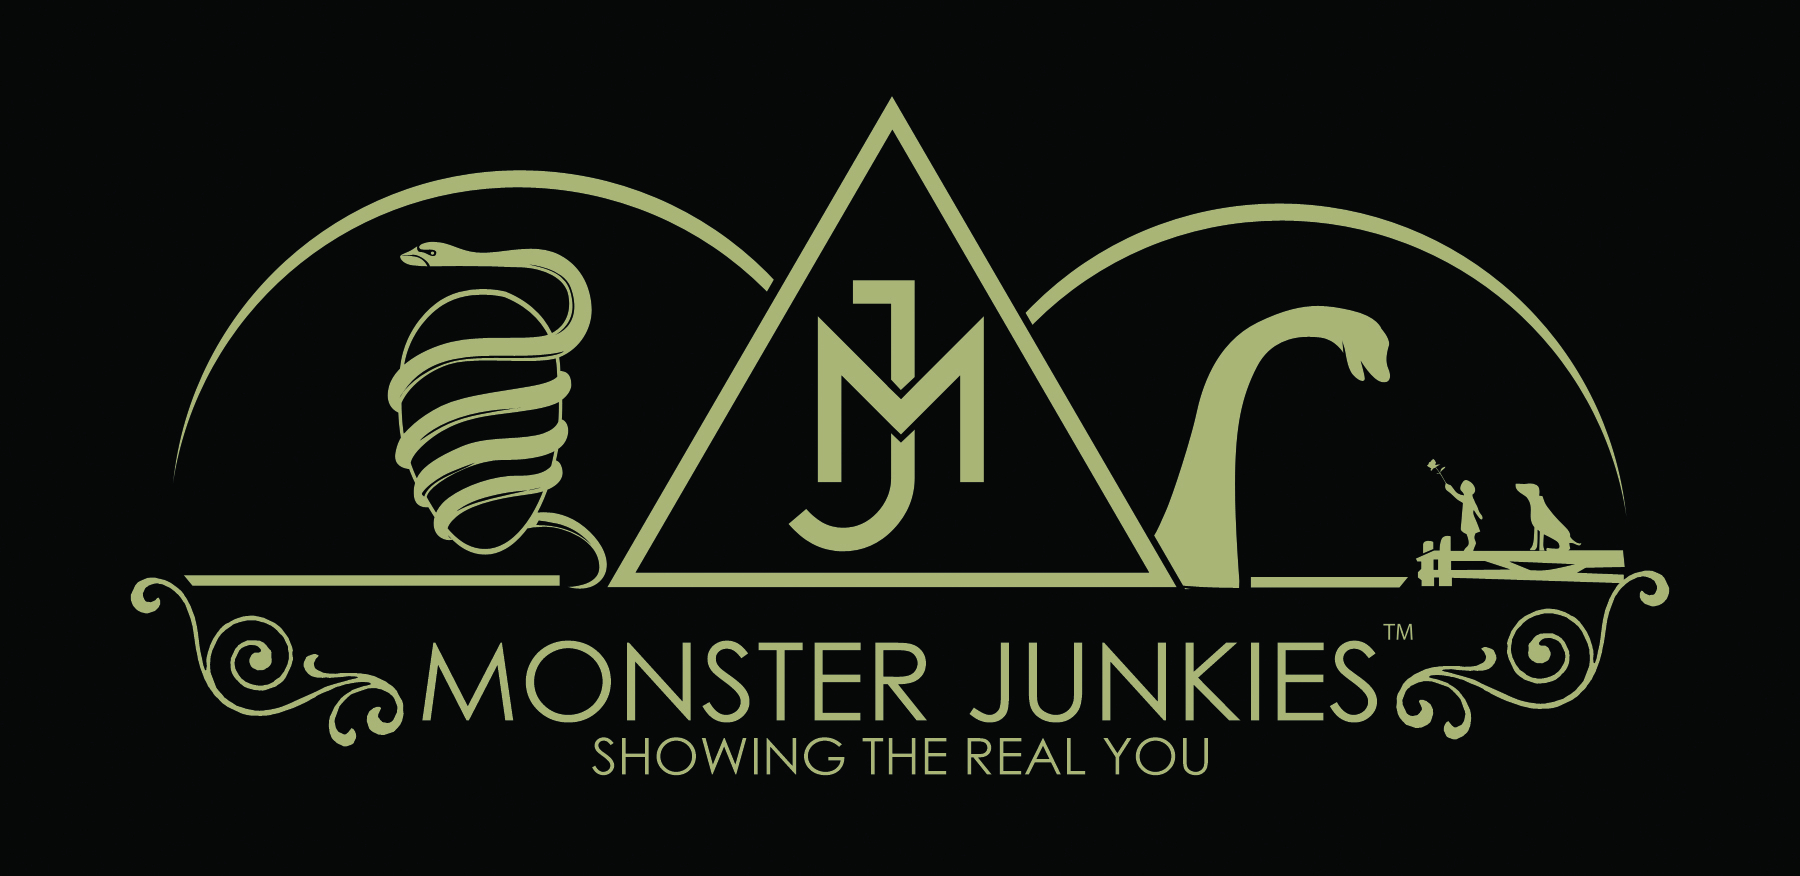 The monsterjunkies logo